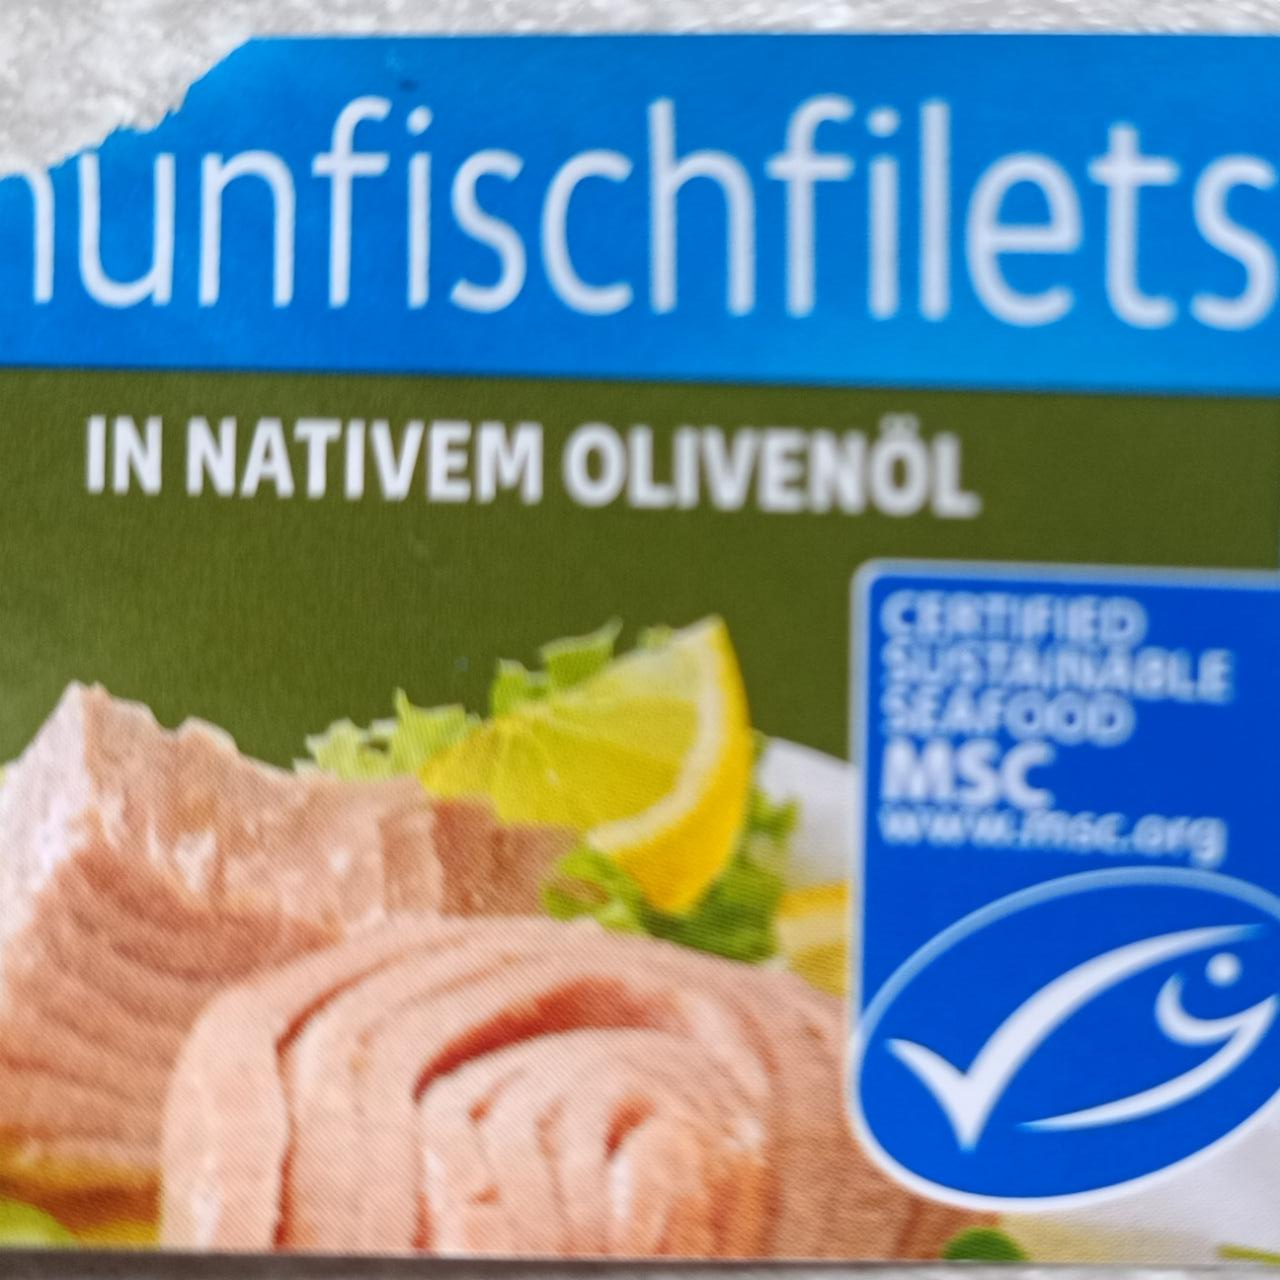 Fotografie - Thunfischfilets in nativem olivenöl K-Classic [cs]